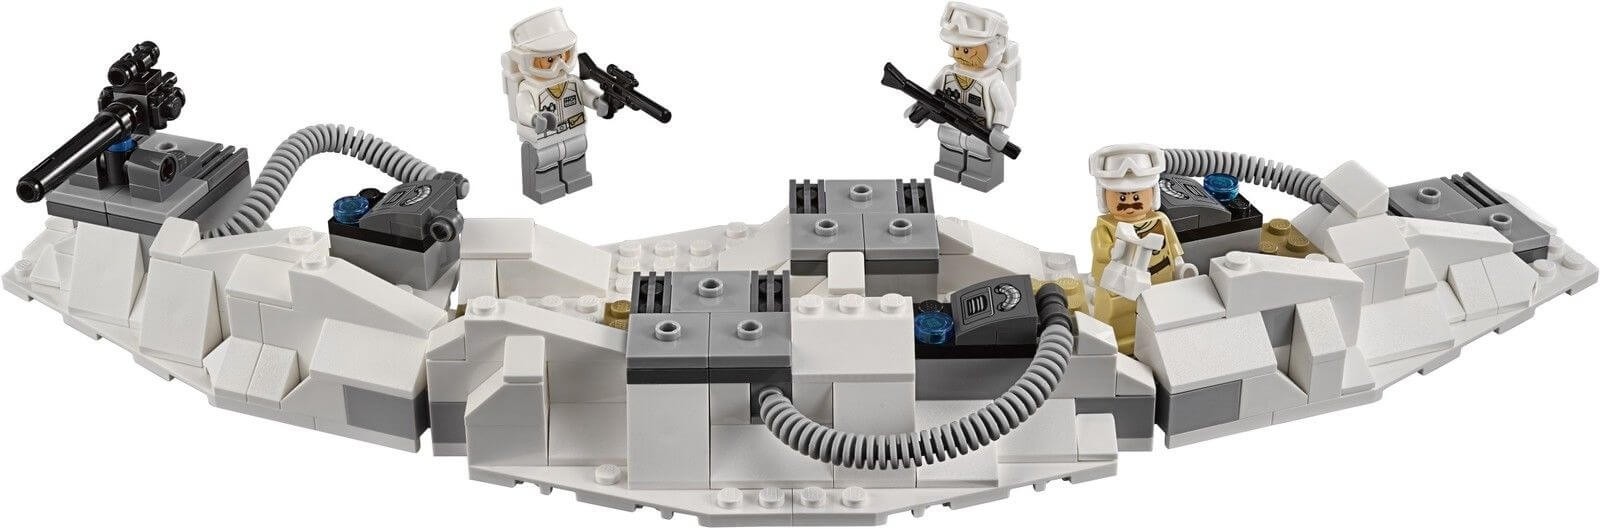 Lego Star Wars 75098 Assauult on Hoth